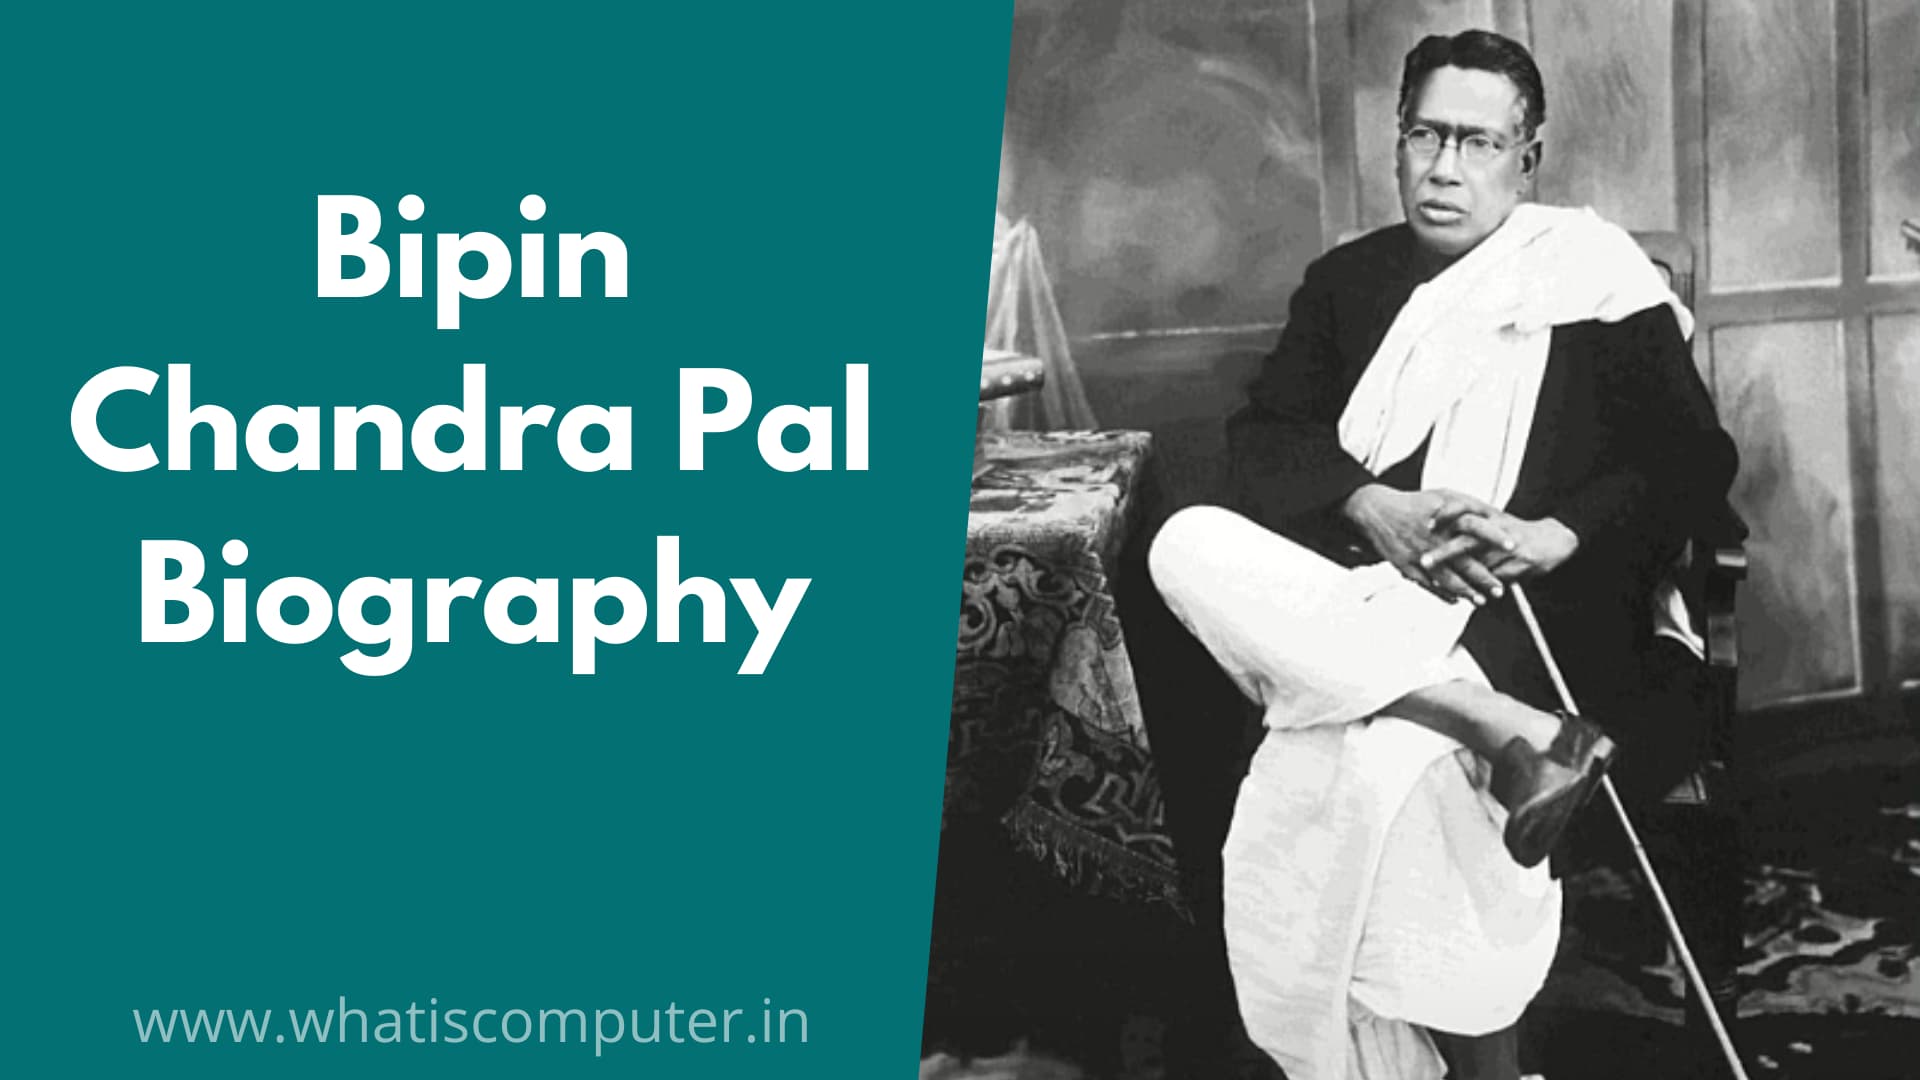 Bipin Chandra Pal Biography. Who is Bipin Chandra